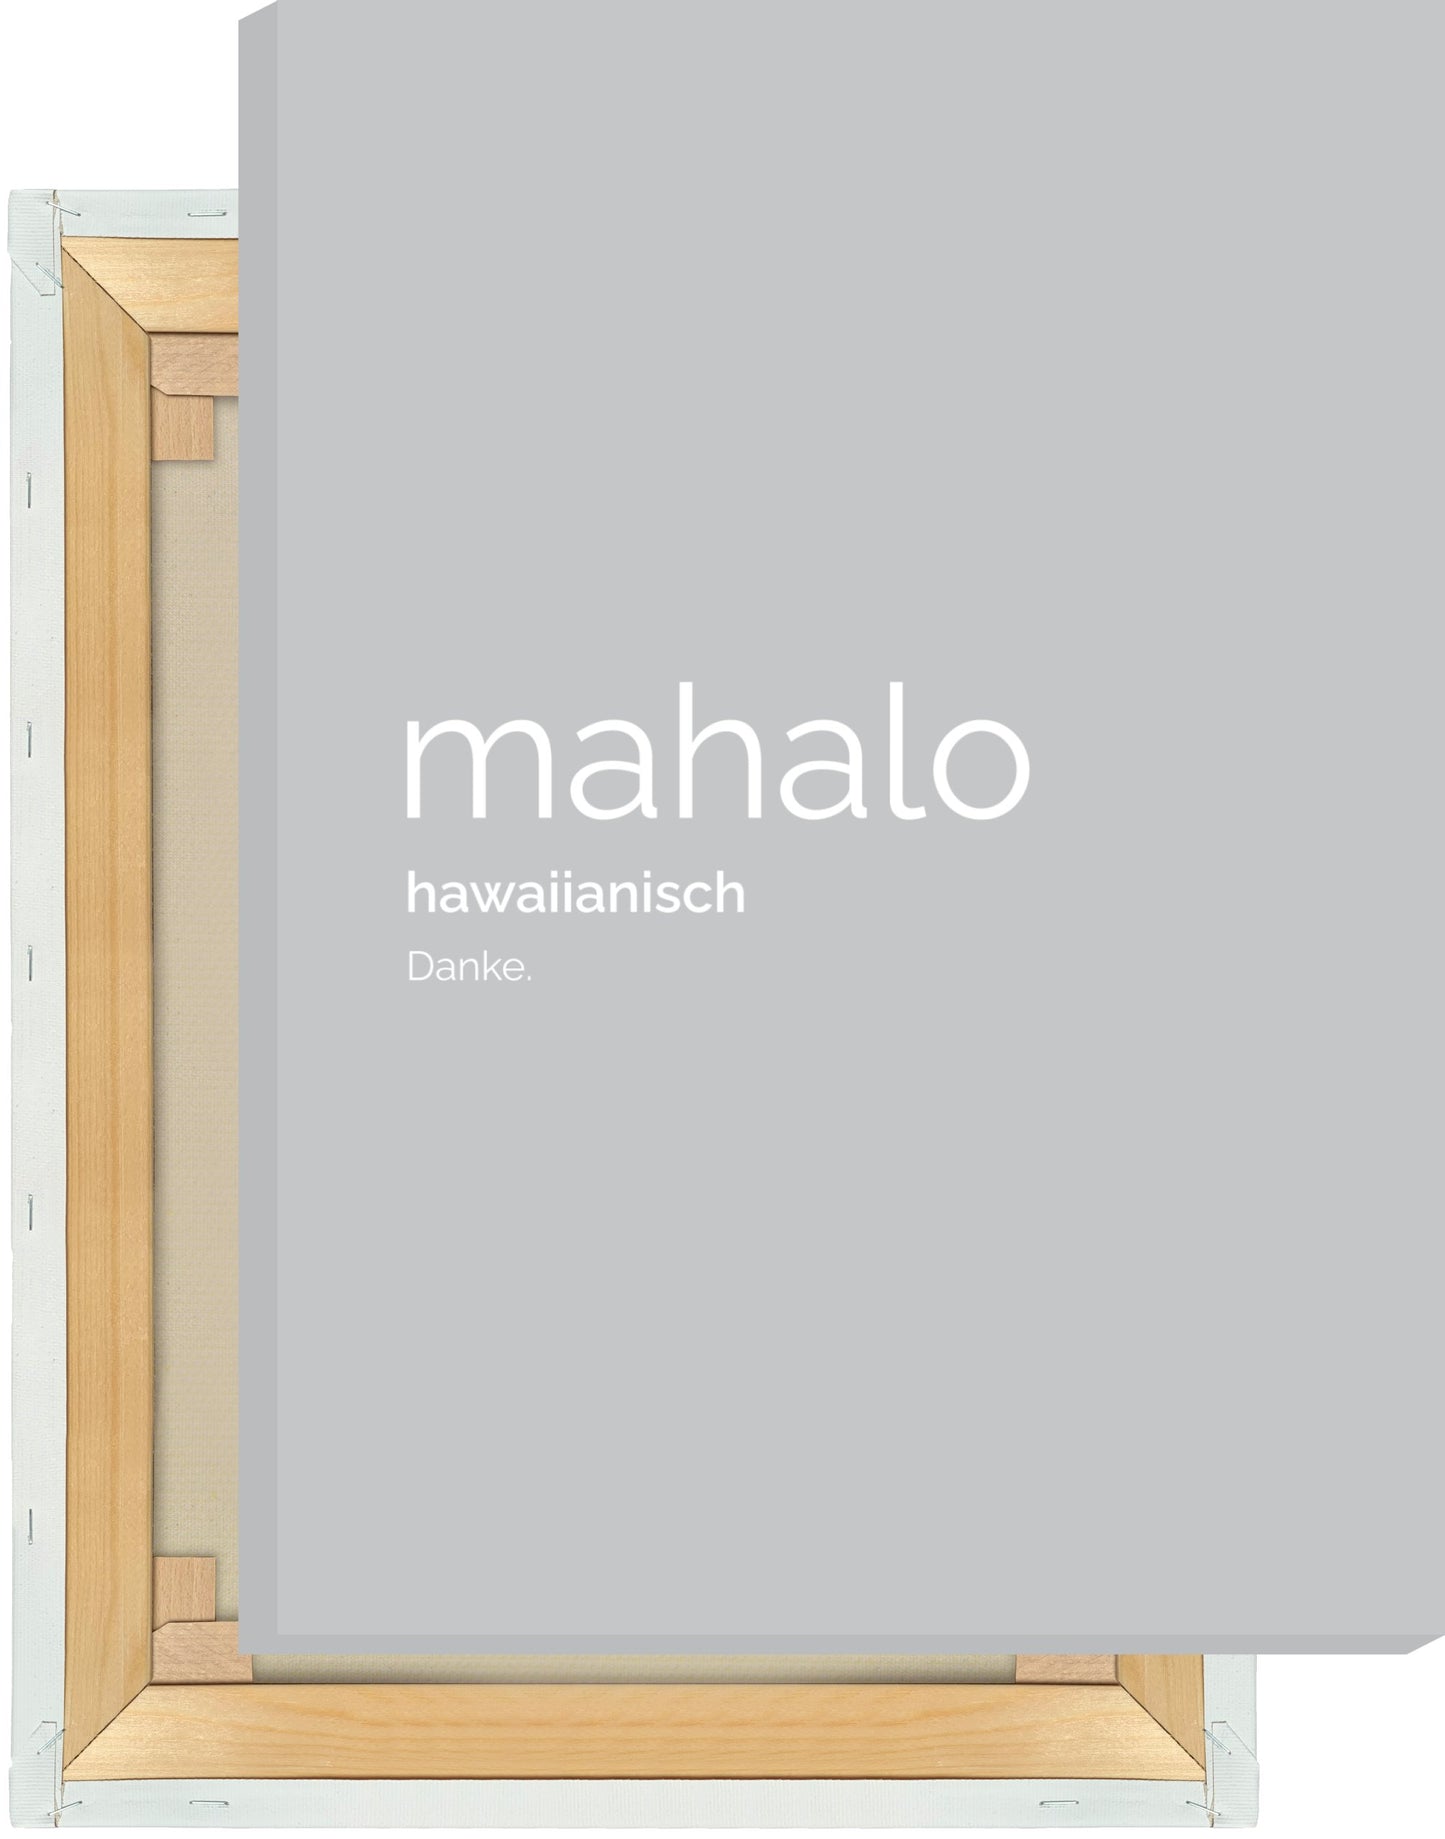 Leinwand Mahalo (Hawaiianisch: Danke)